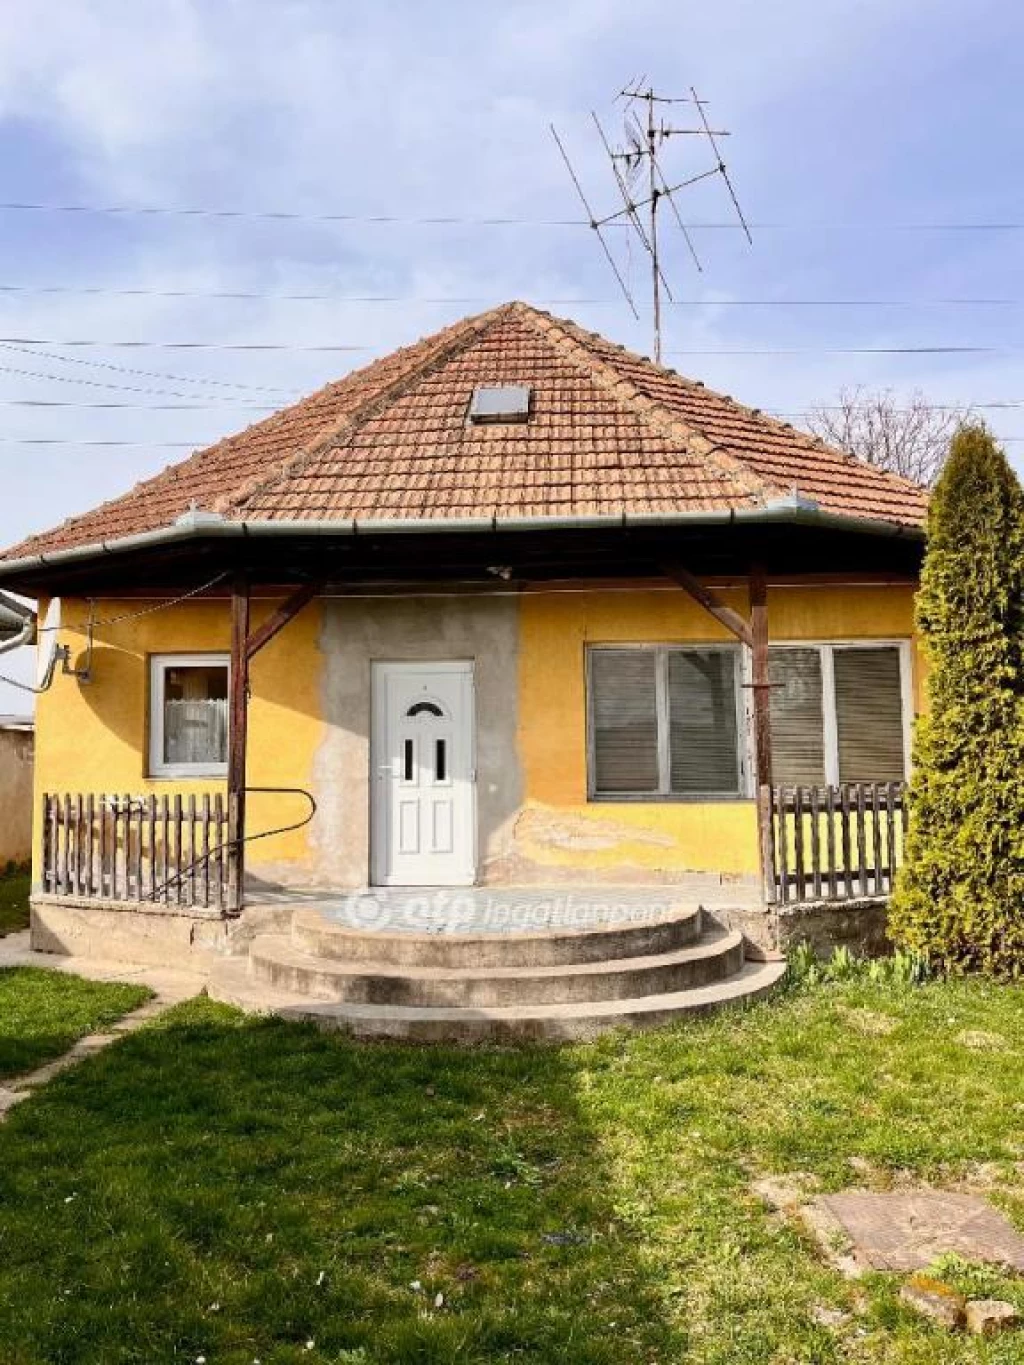 For sale house, Pécs, Tüskésréti út